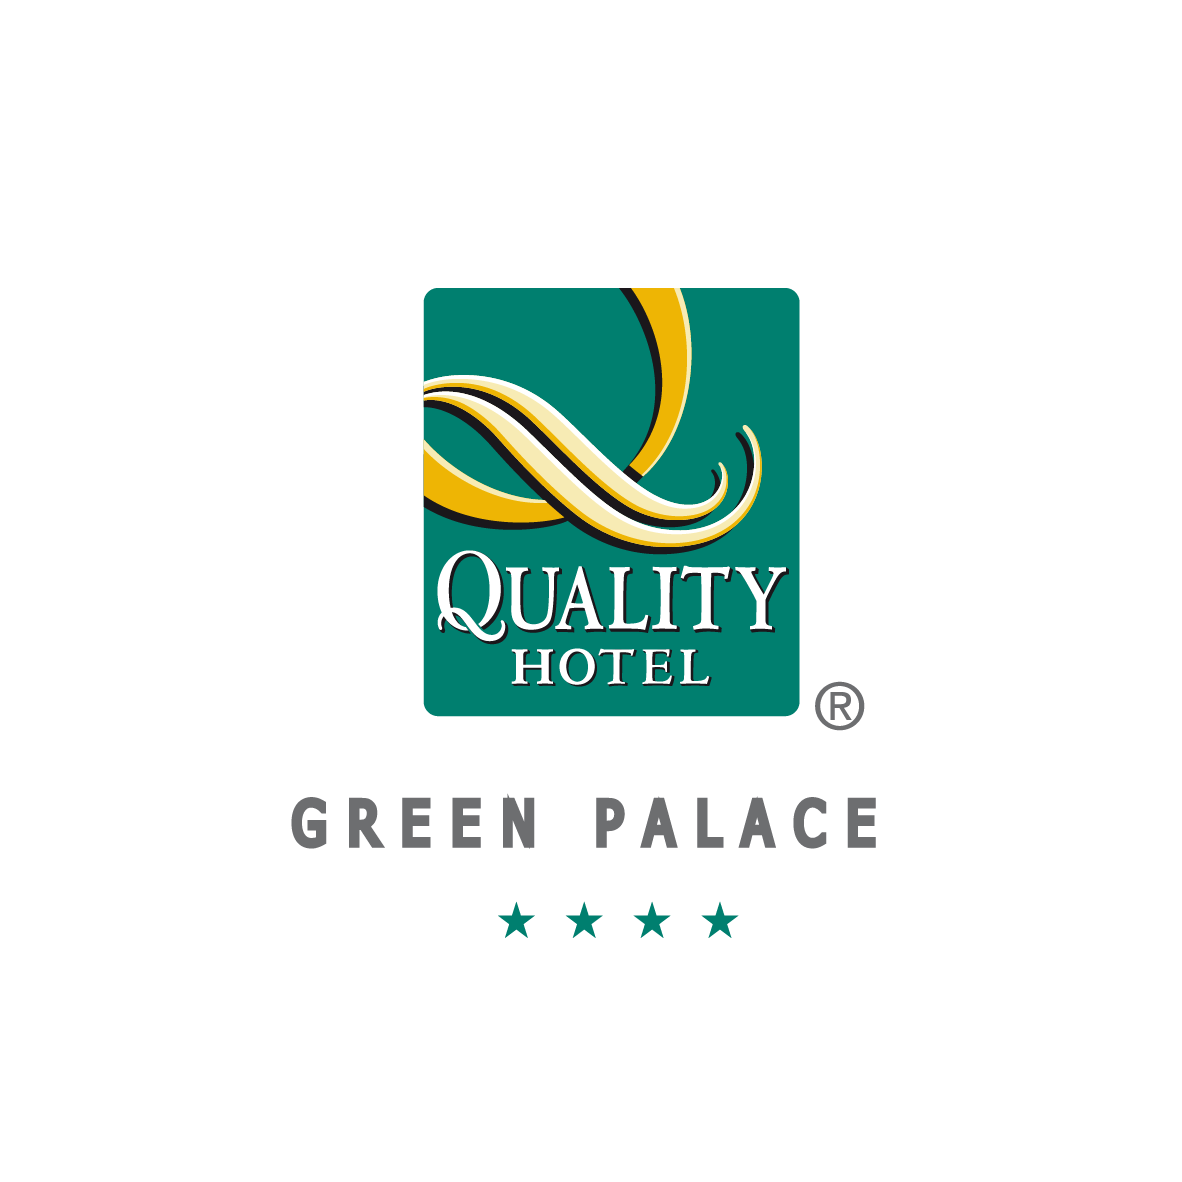 01 - Quality Hotel Green Palace_Tavola disegno 1